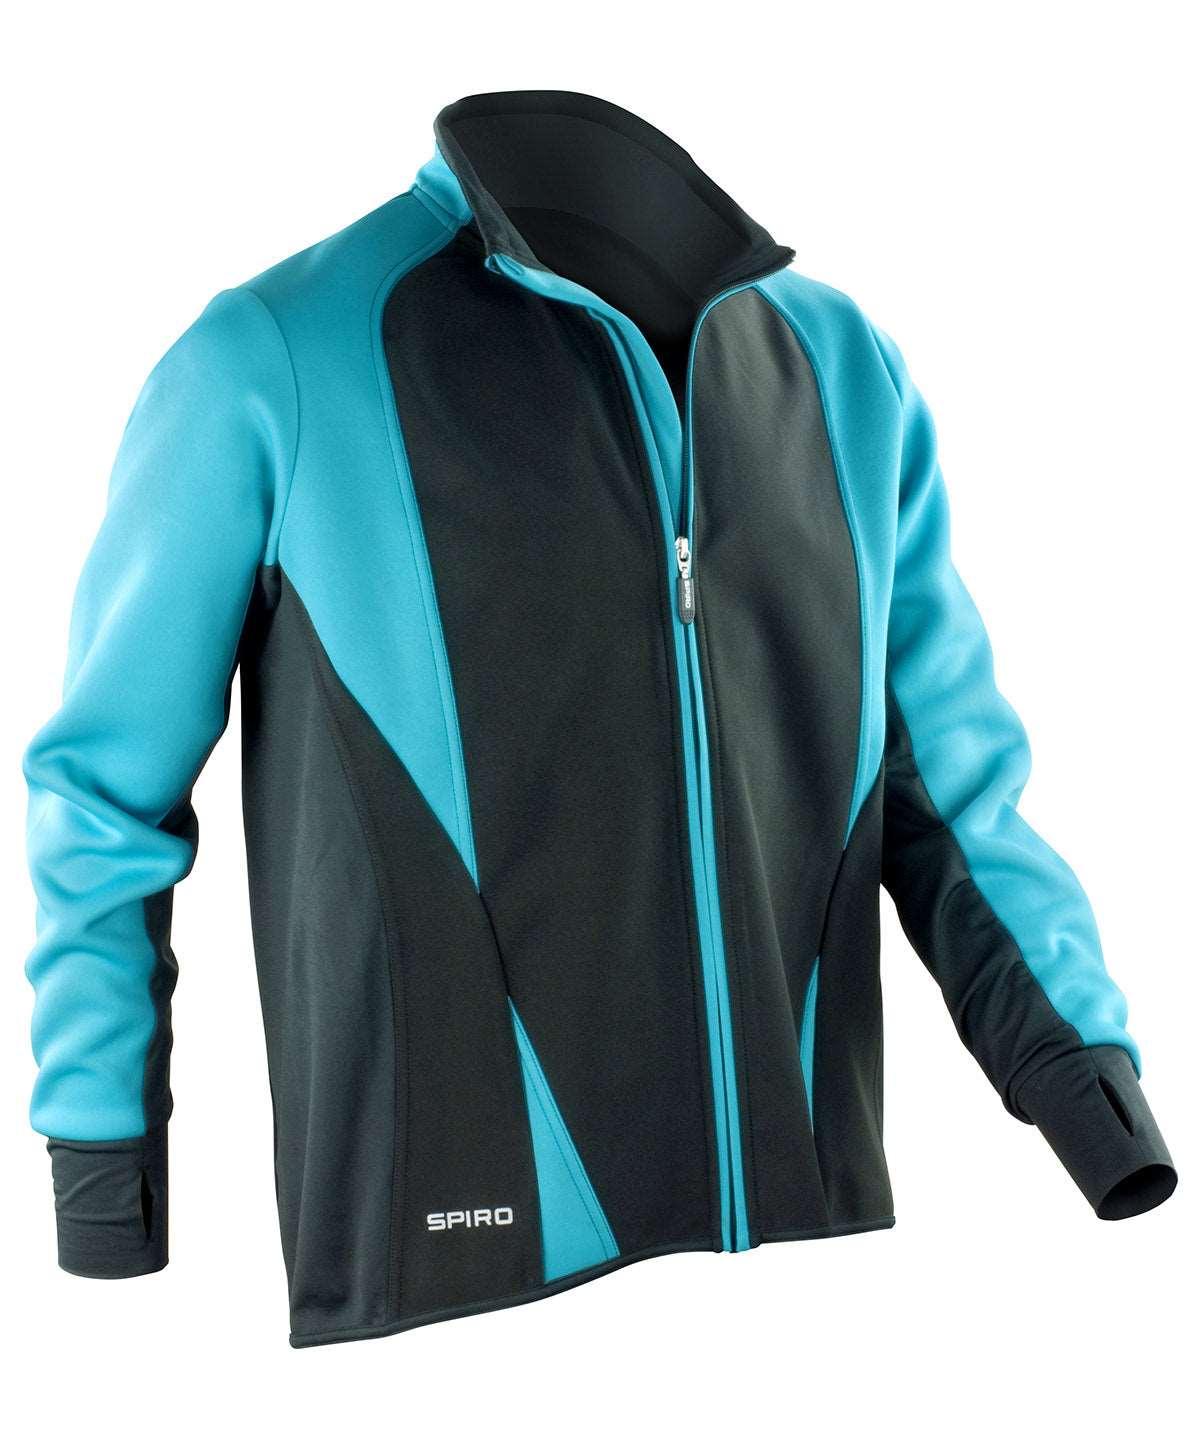 Aqua/Black - Spiro freedom softshell jacket Jackets Spiro Jackets & Coats, Plus Sizes, Result Offer, Softshells, Sports & Leisure Schoolwear Centres